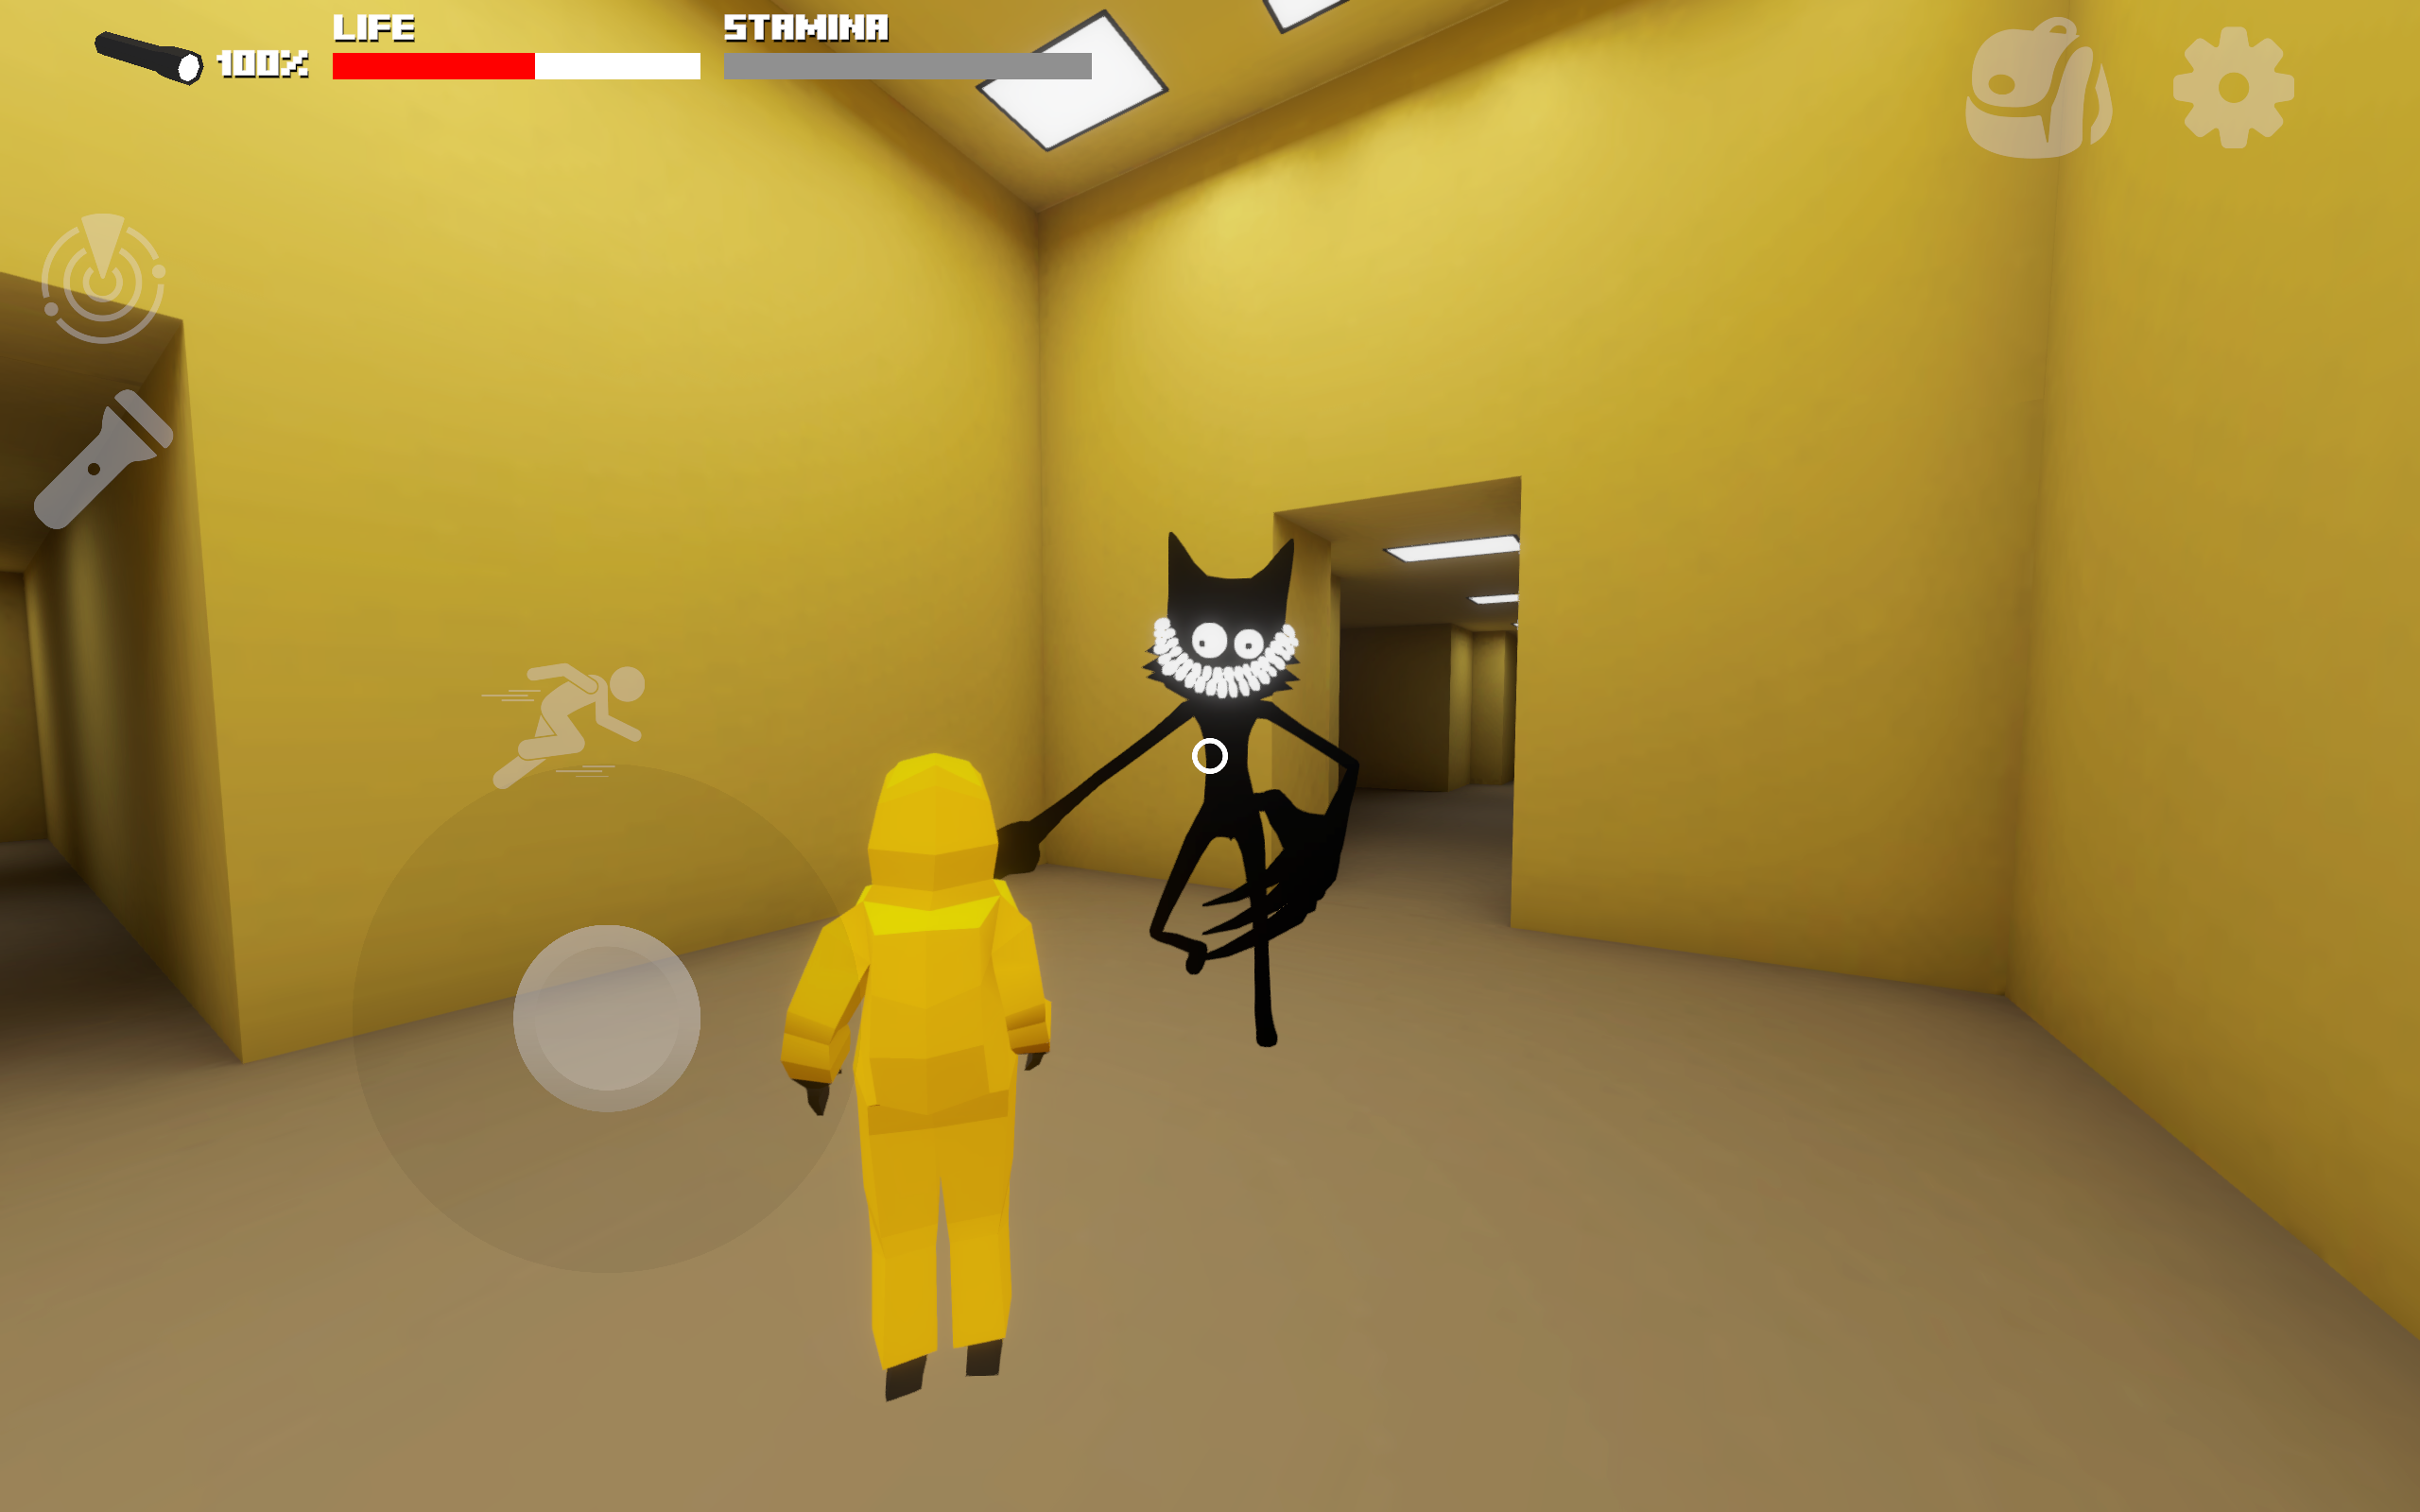 Poly Backrooms Multiplayer screenshot game